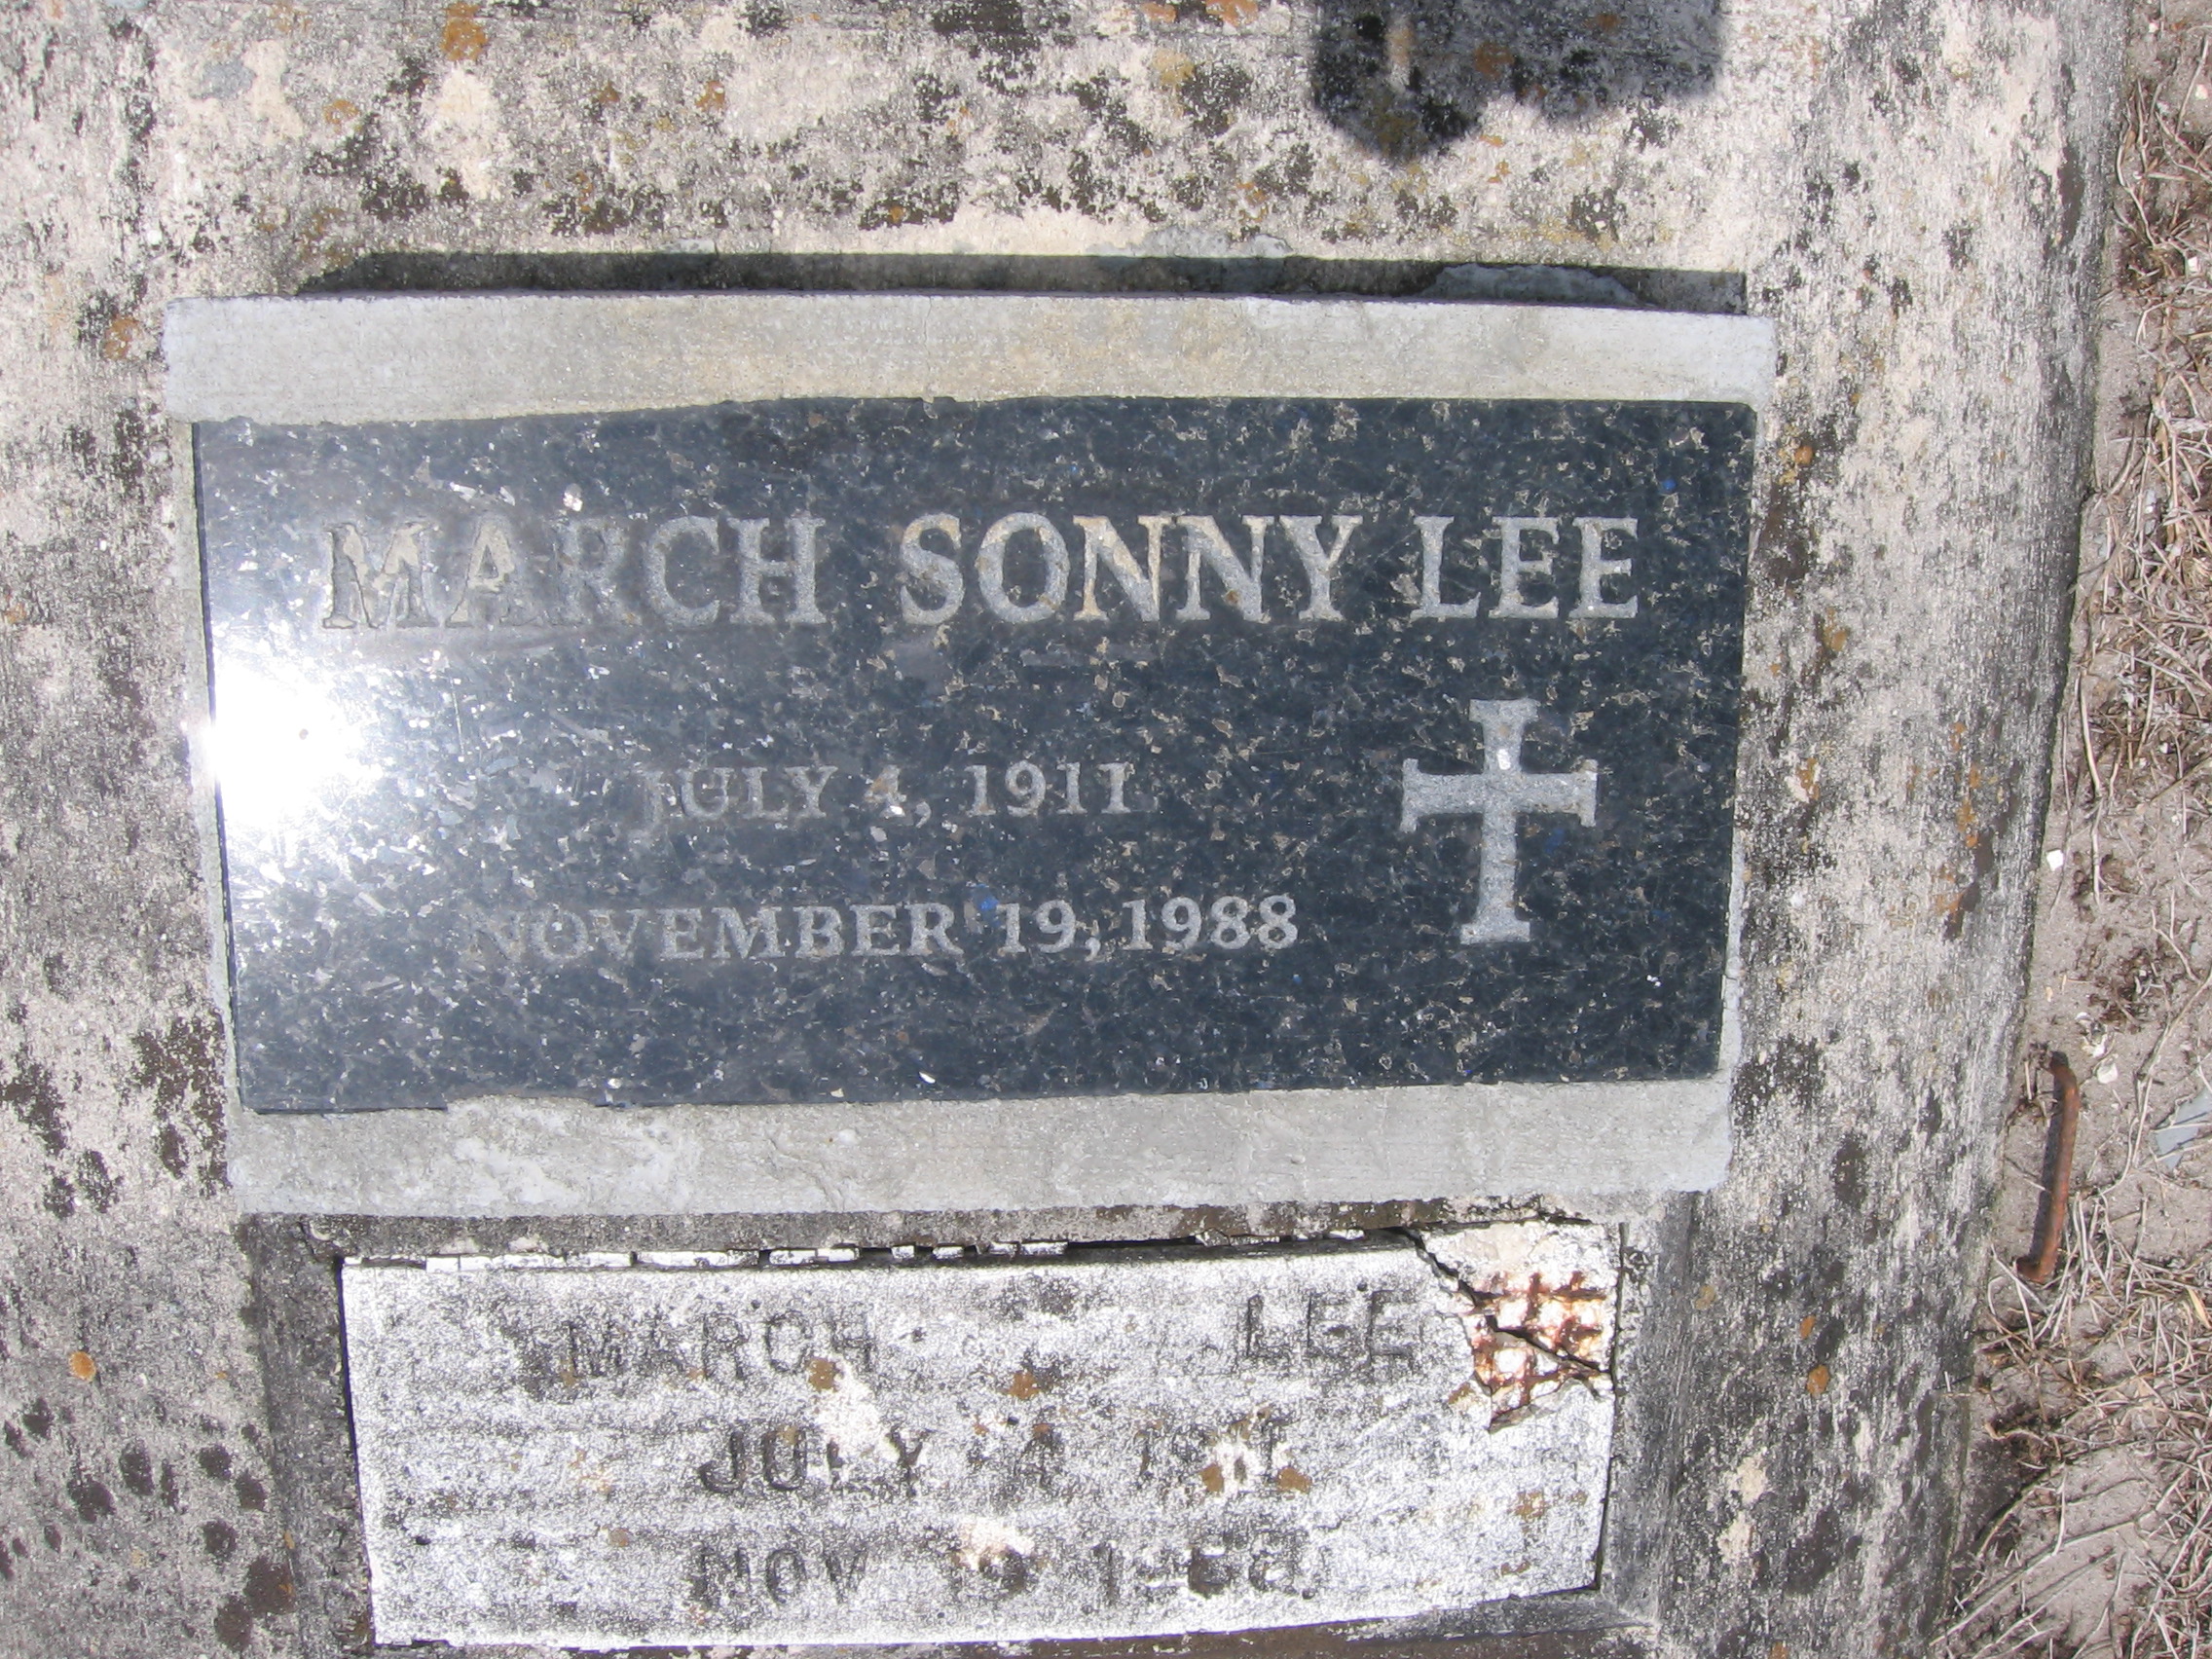 March Sonny Lee